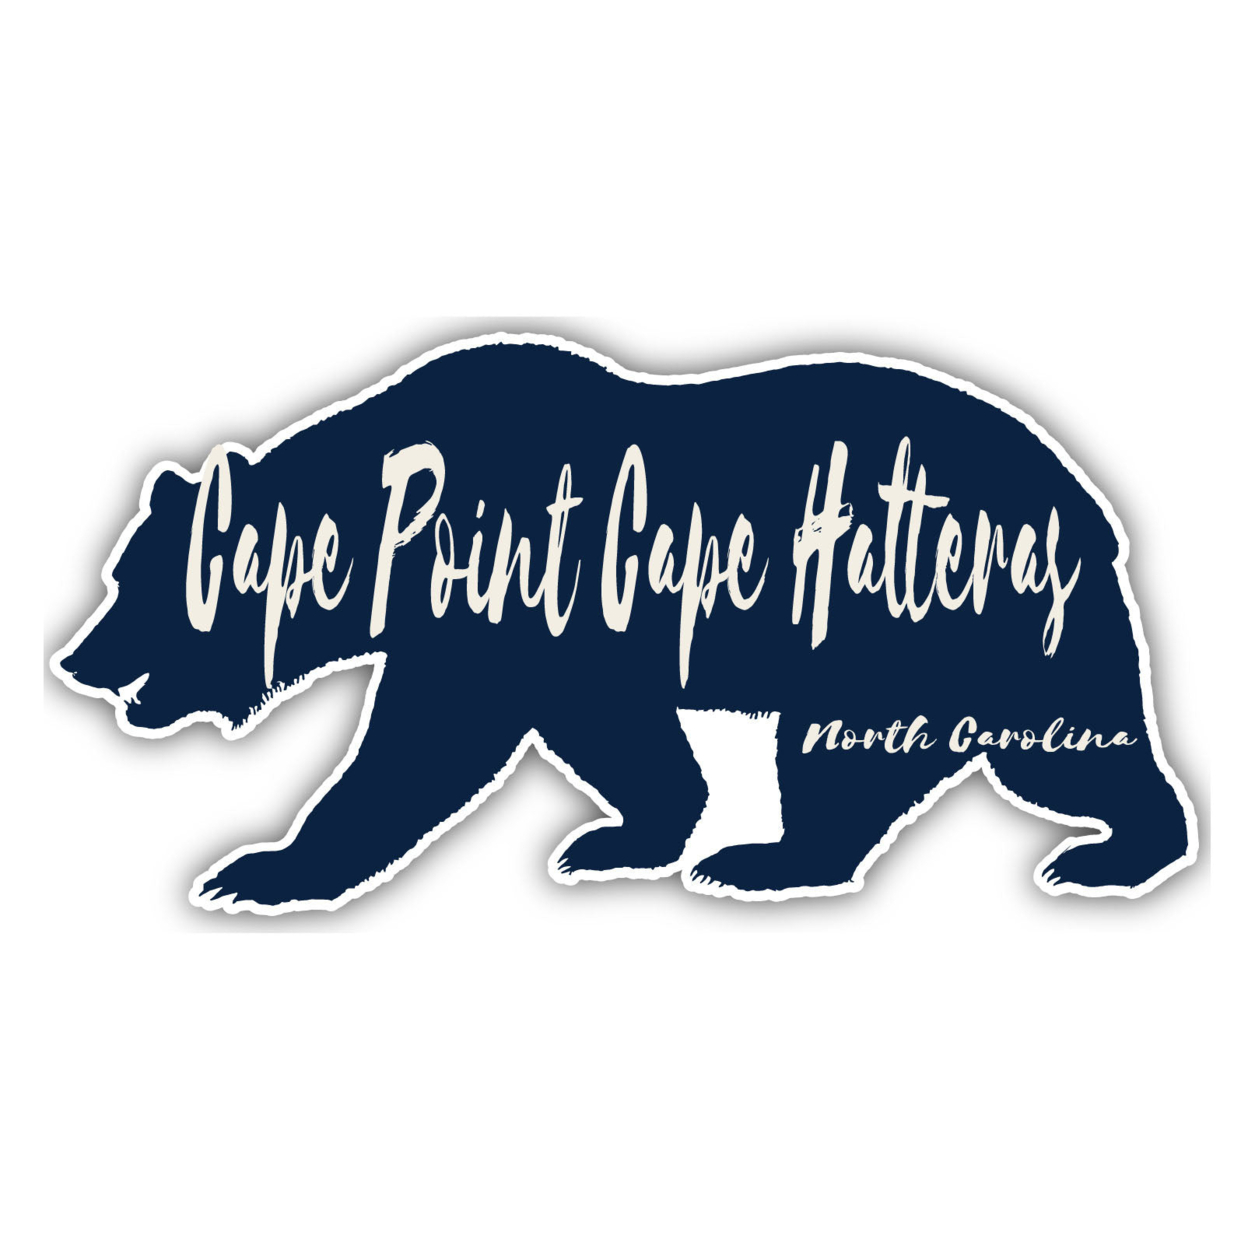 Cape Point Cape Hatteras North Carolina Souvenir Decorative Stickers (Choose Theme And Size) - Single Unit, 12-Inch, Bear